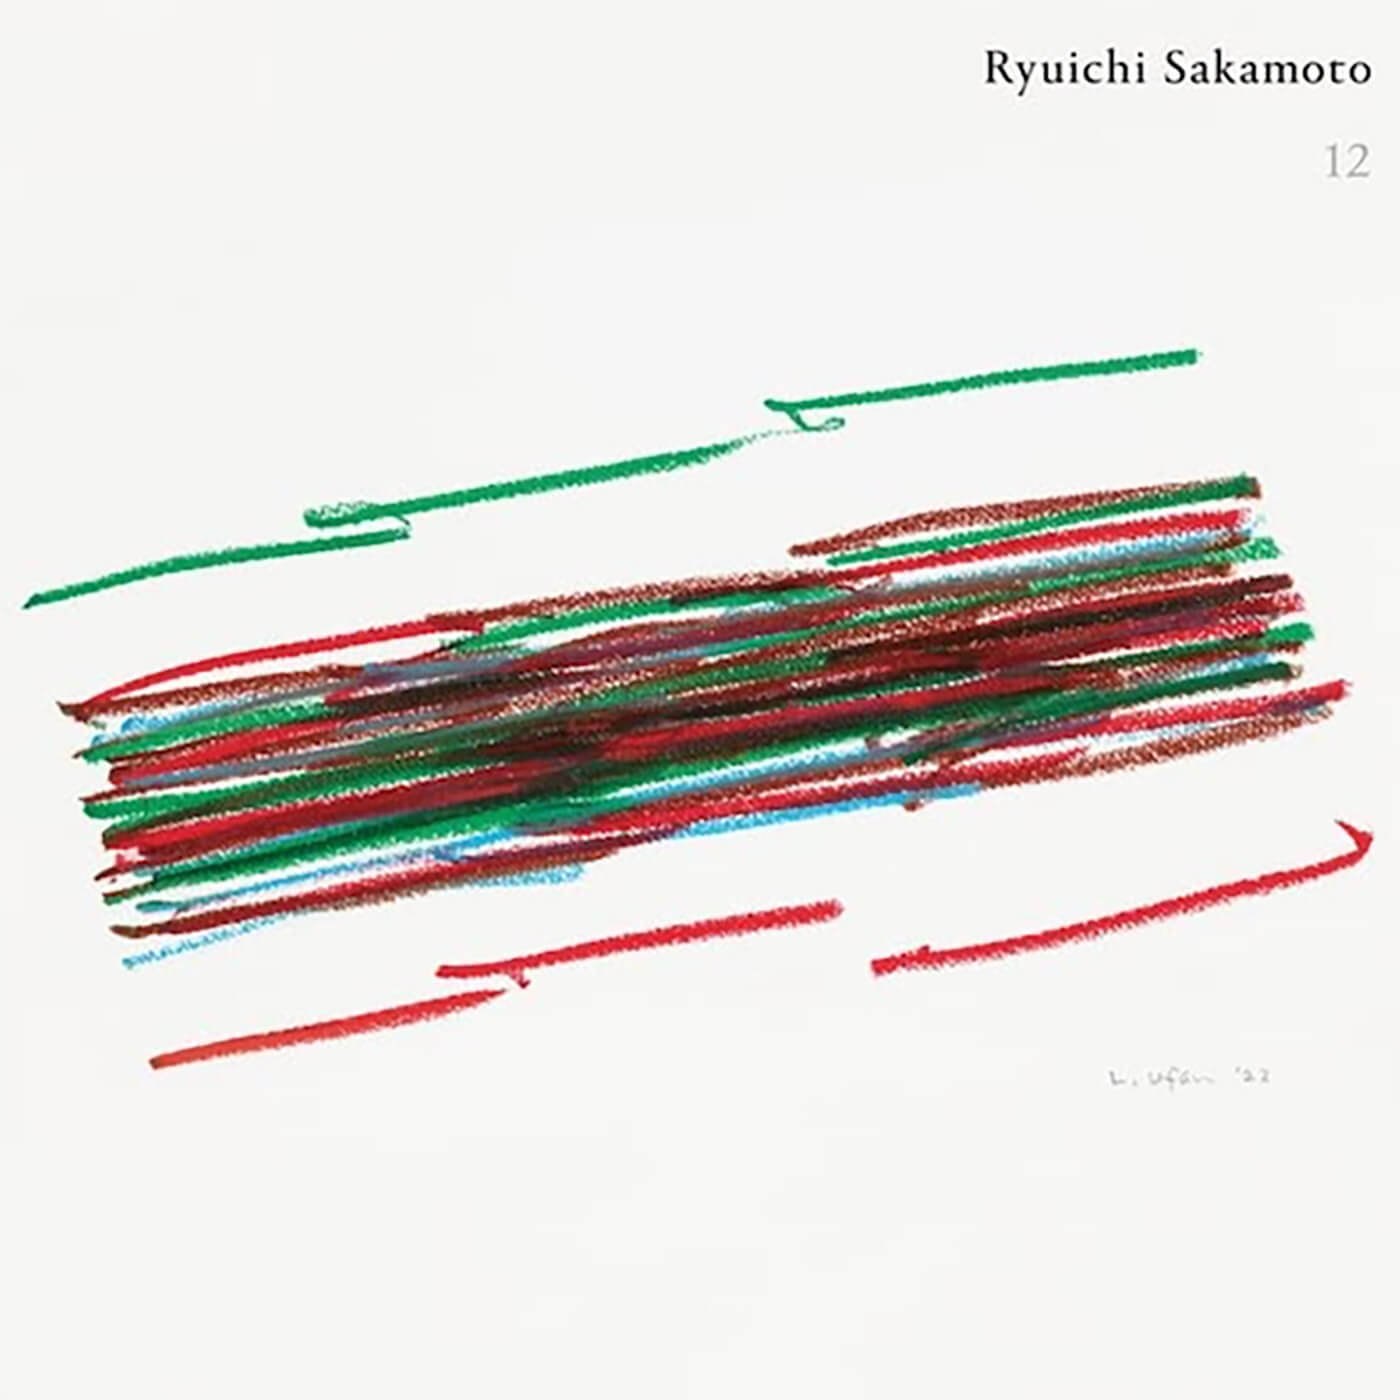 The cover art for Ryuichi Sakamoto's '12'